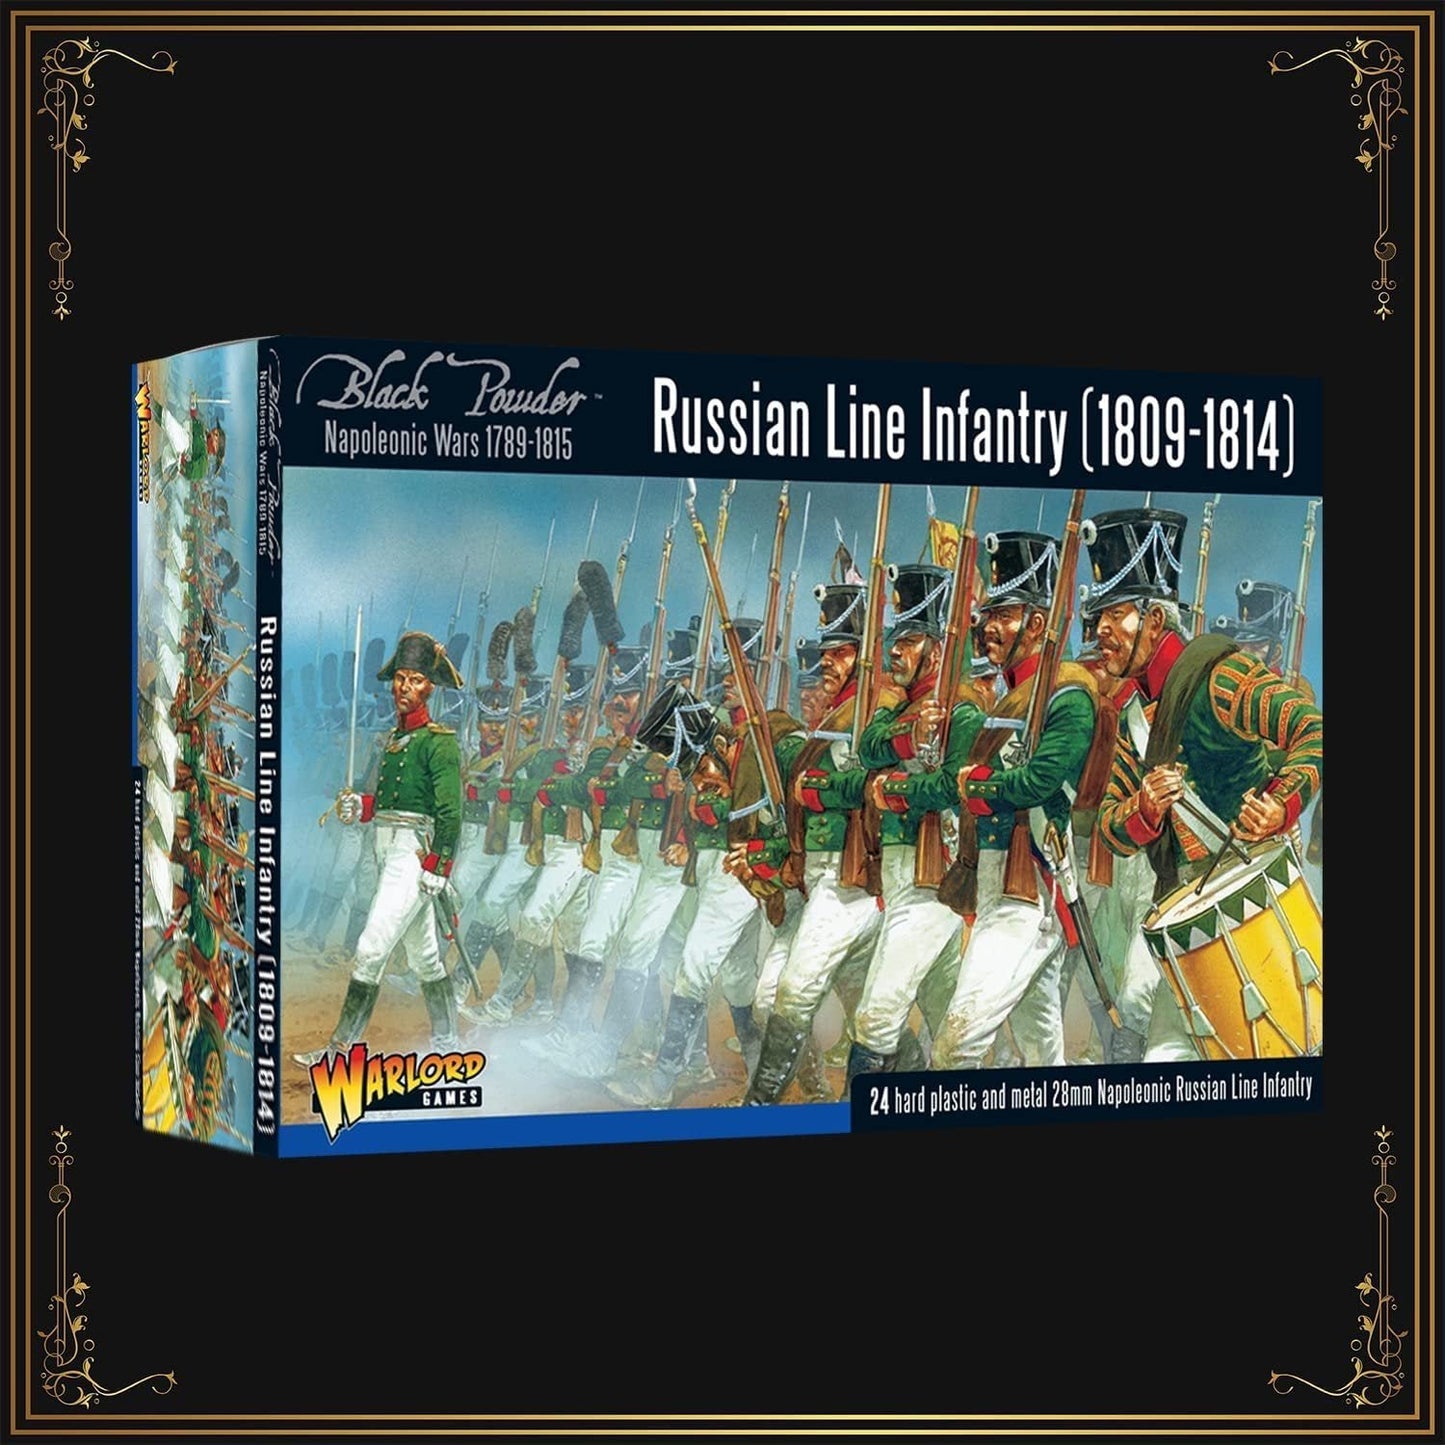 Black Powder - Napoleonic Russians: Russian Line Infantry (1809 - 1814)